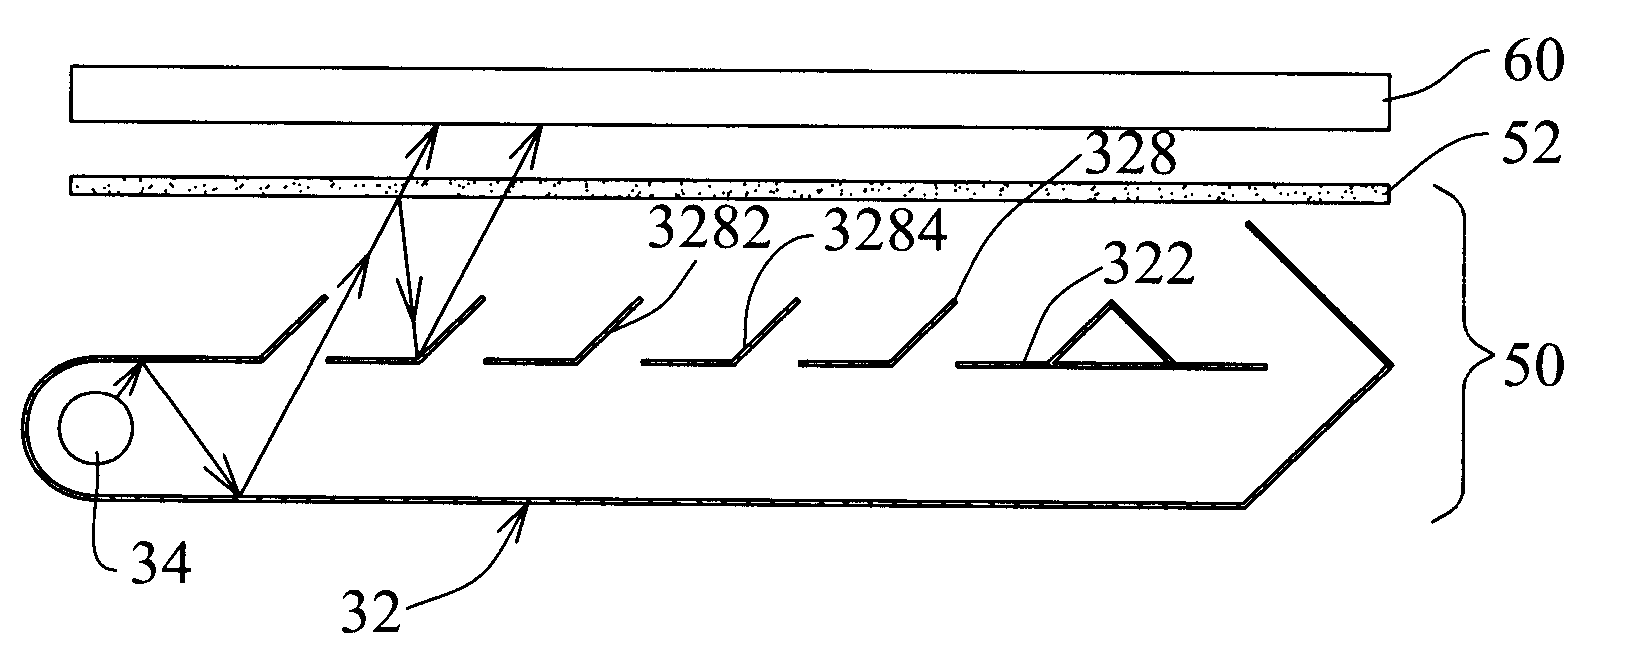 Structure of planar illuminator